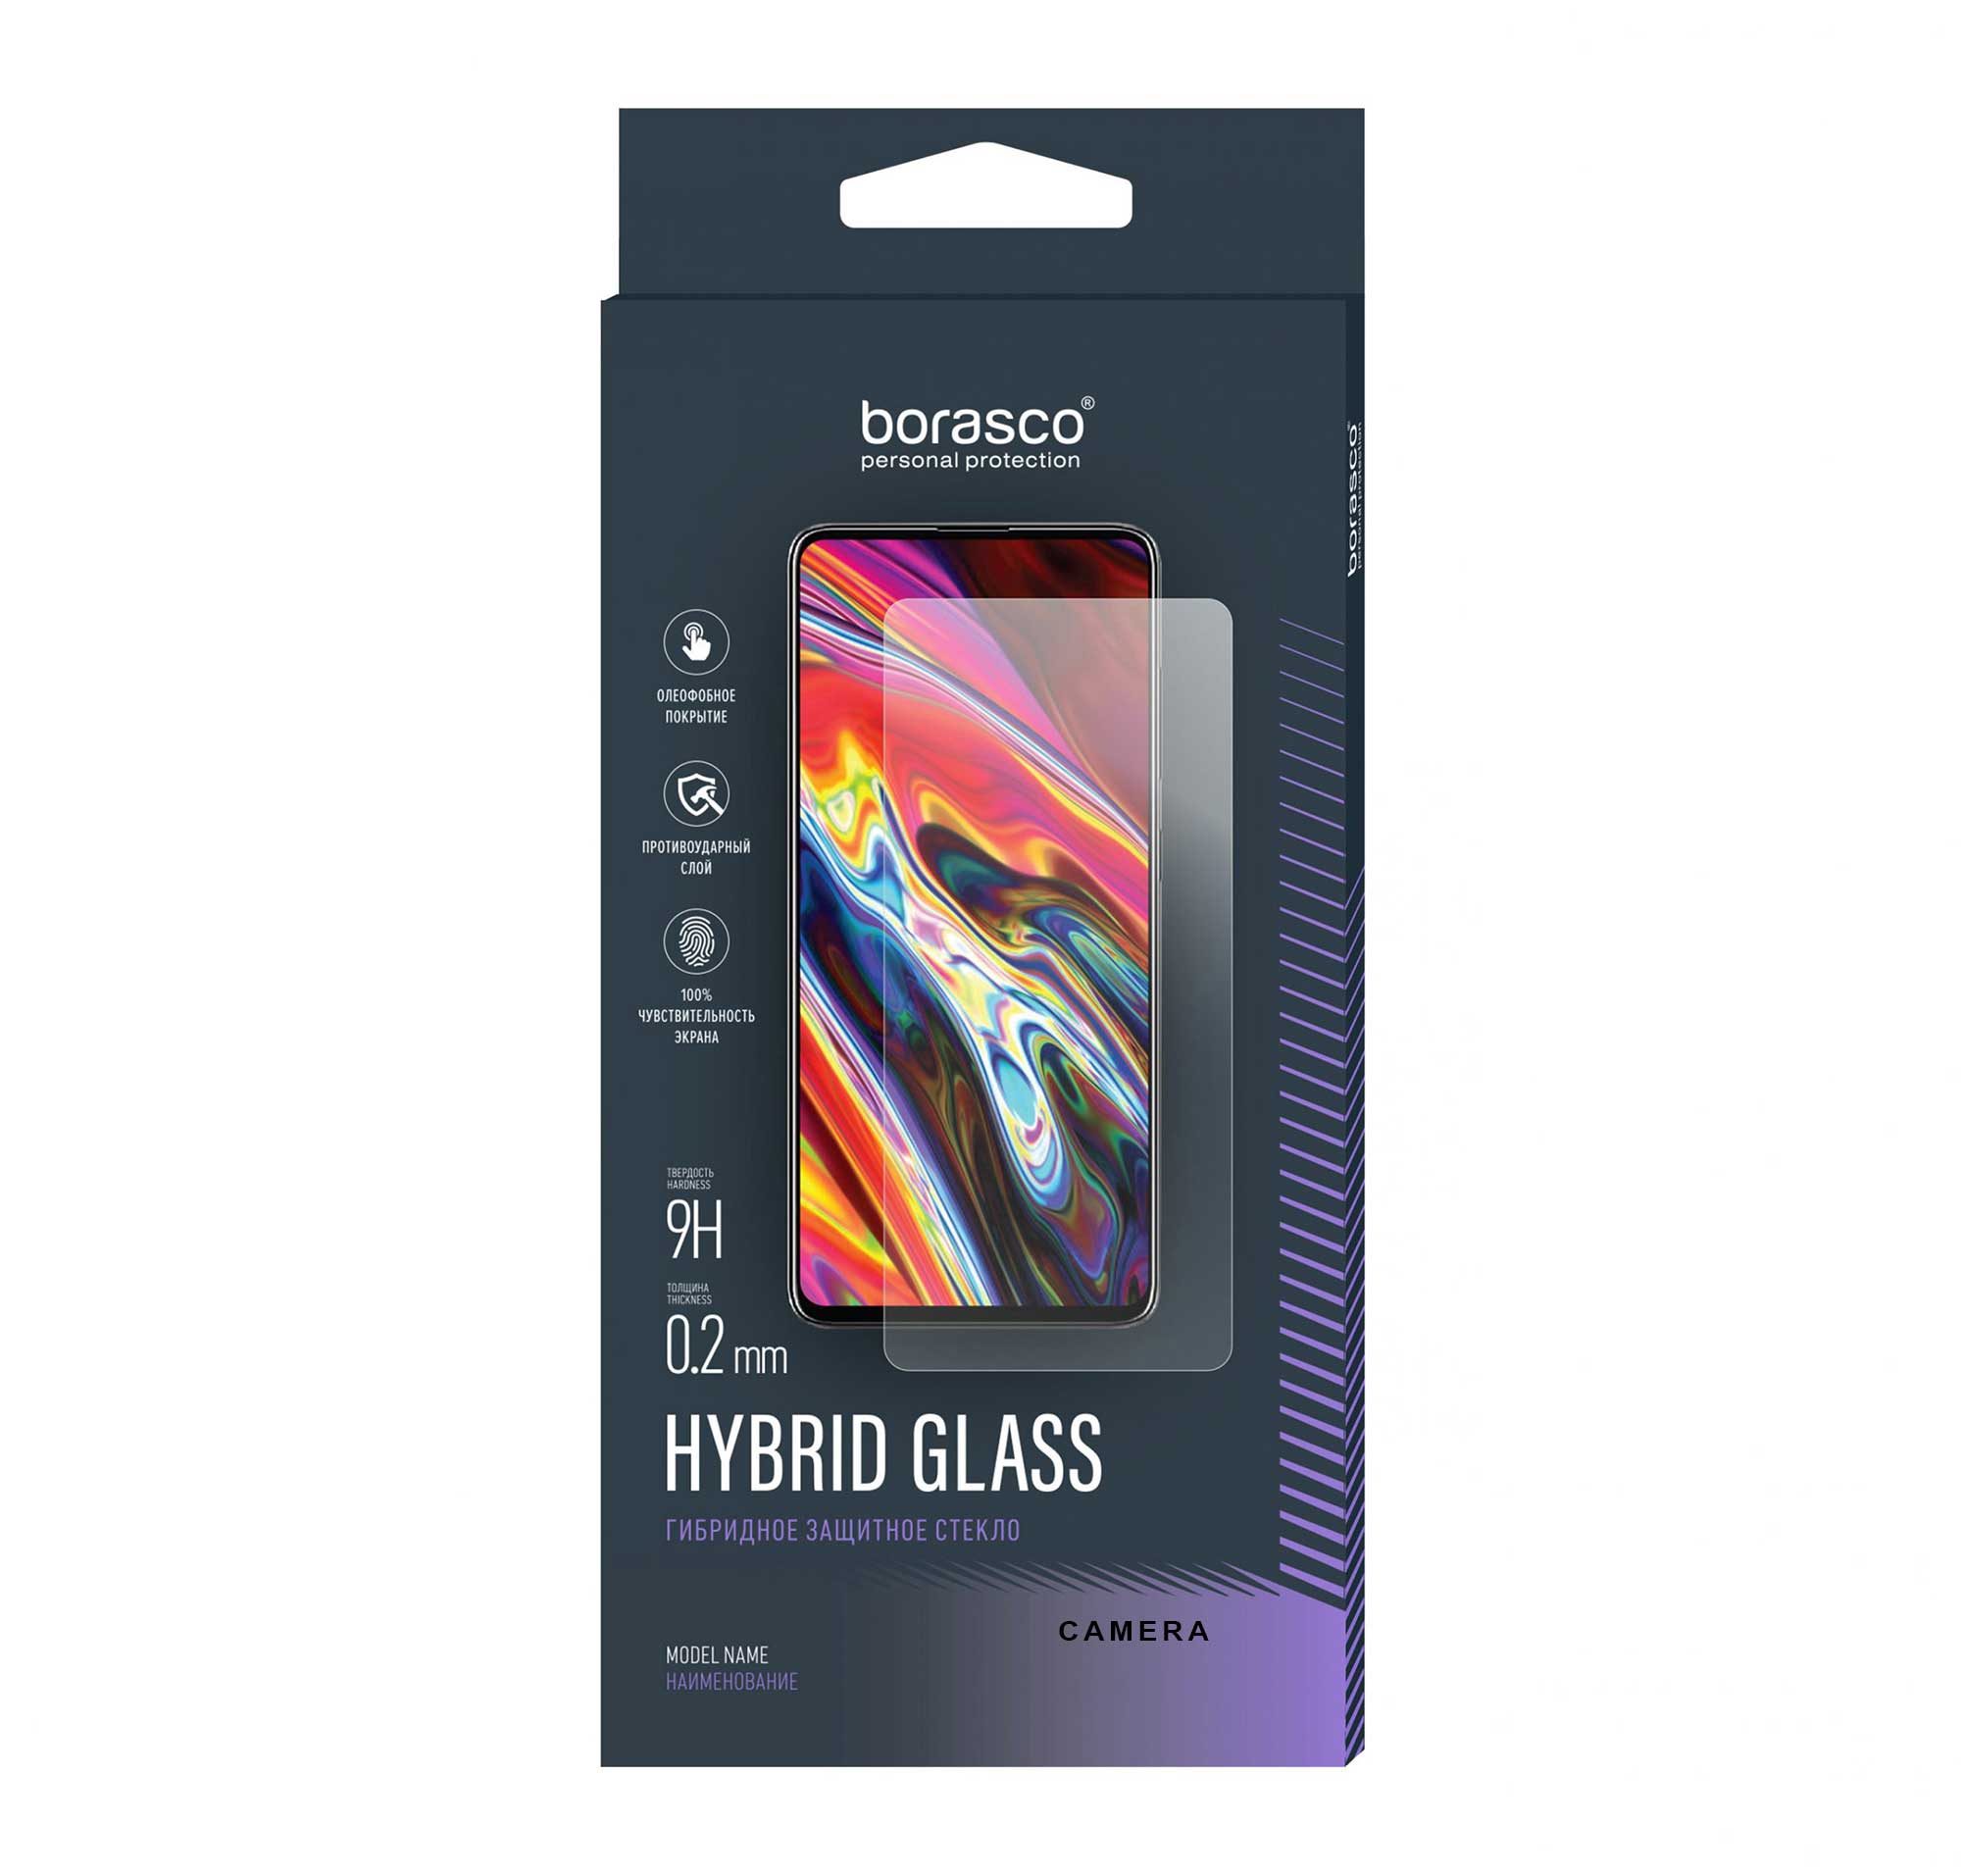 Защитное стекло (Экран+Камера) Hybrid Glass для Tecno Pouvoir 4/ 4Pro чехол задняя панель накладка бампер mypads нарисованный скелет на скейт борде для tecno pouvoir 4 pouvoir 4 pro противоударный